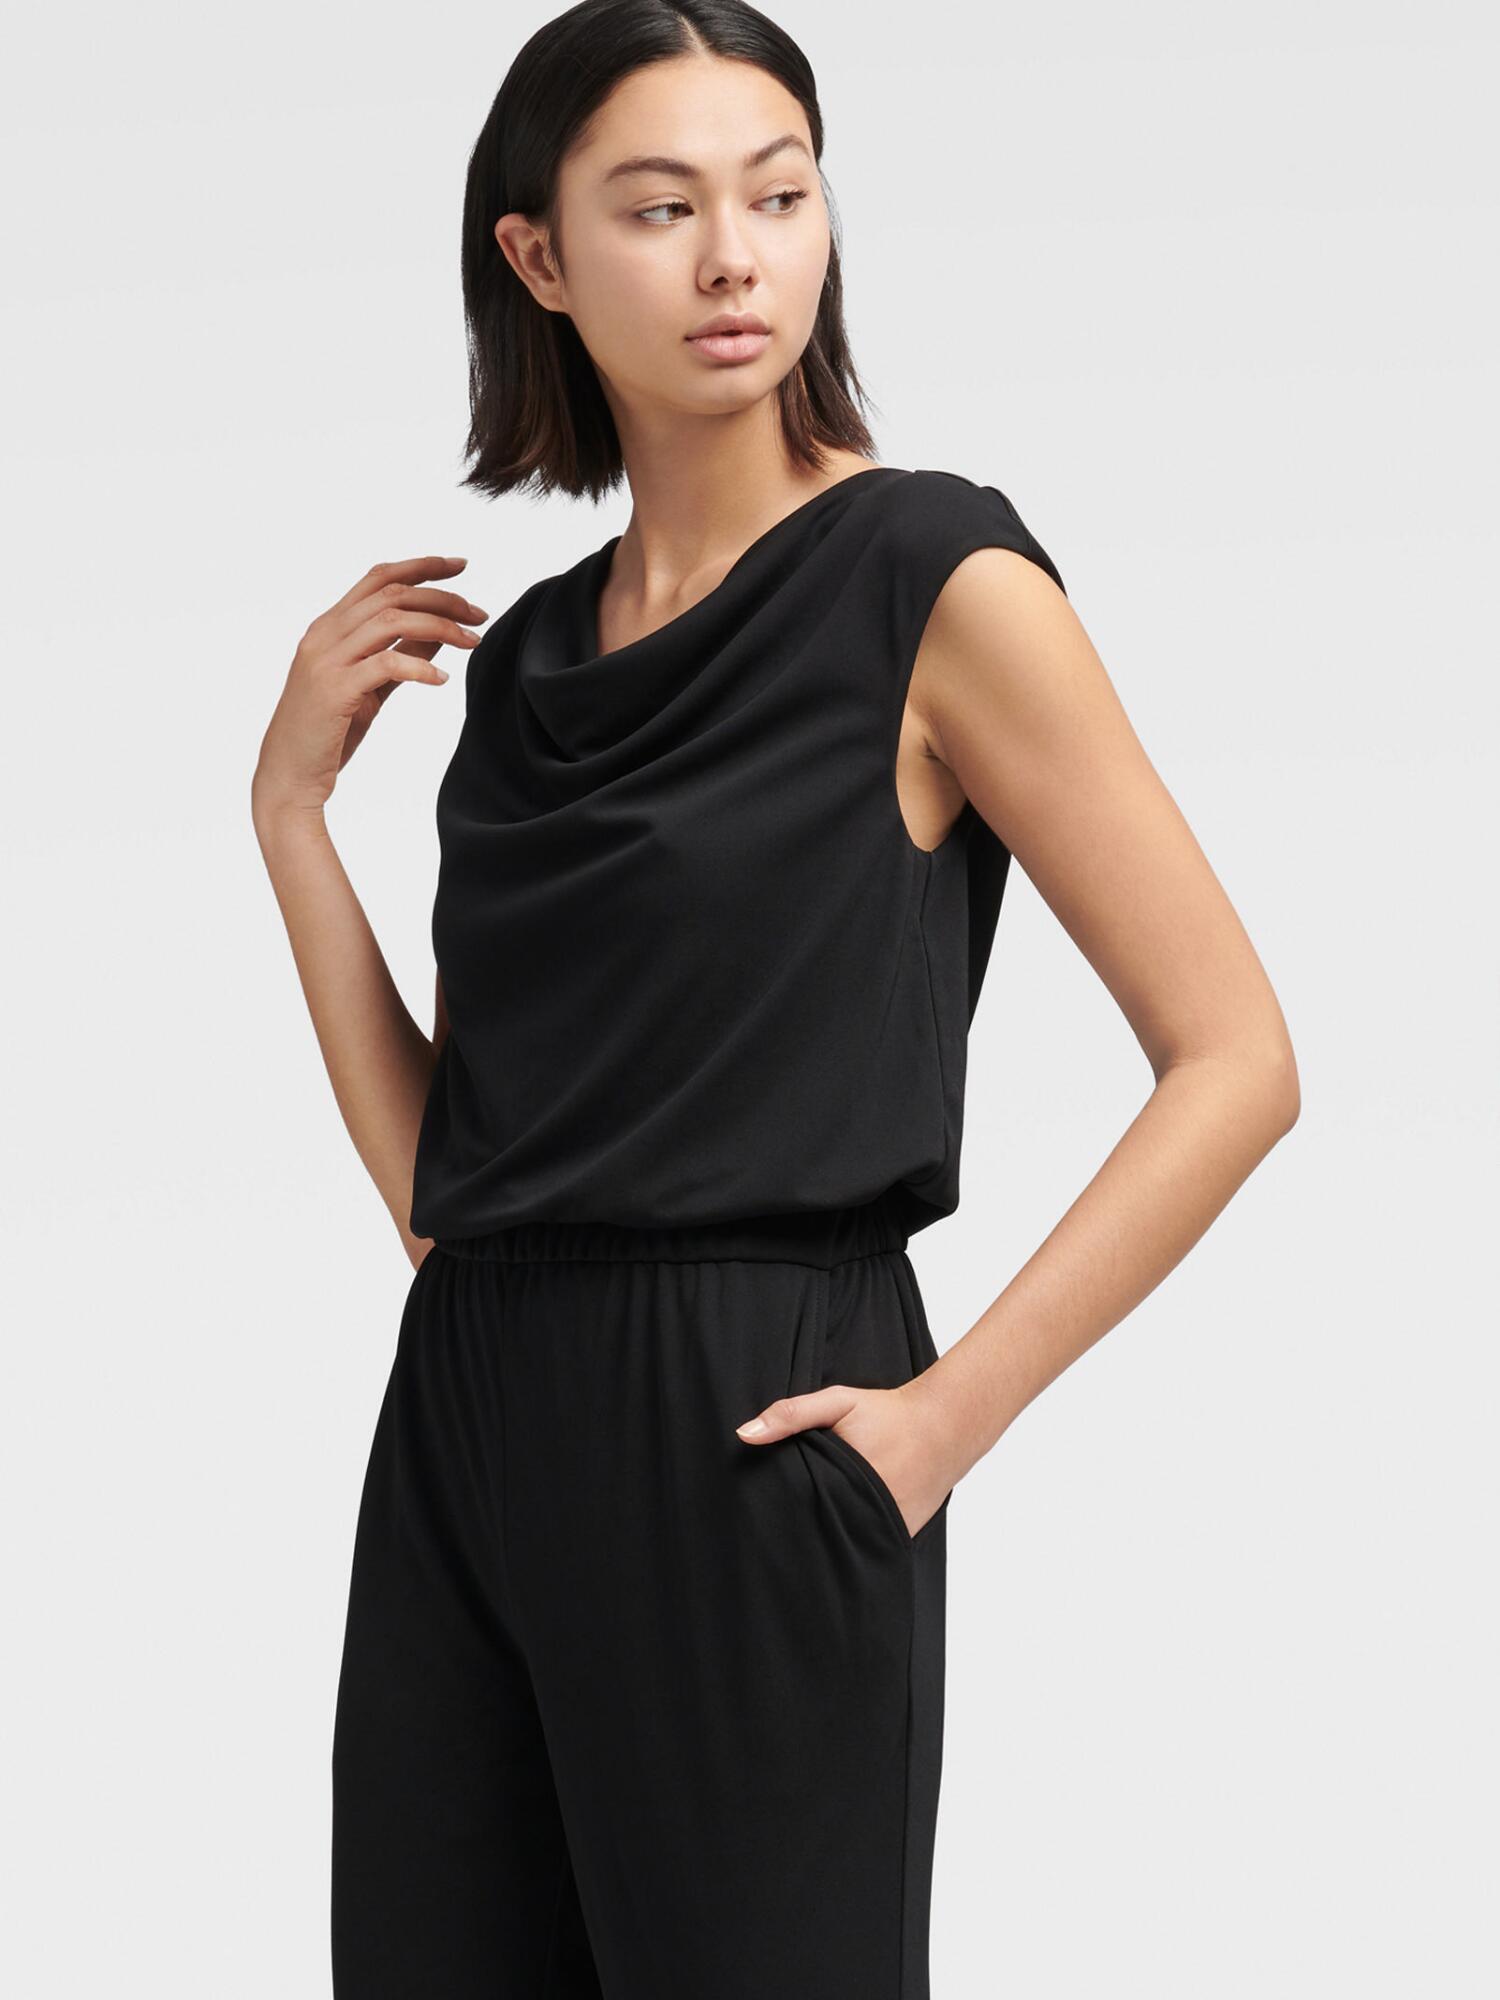 DKNY Cap Sleeve Jumpsuit in Black - Lyst